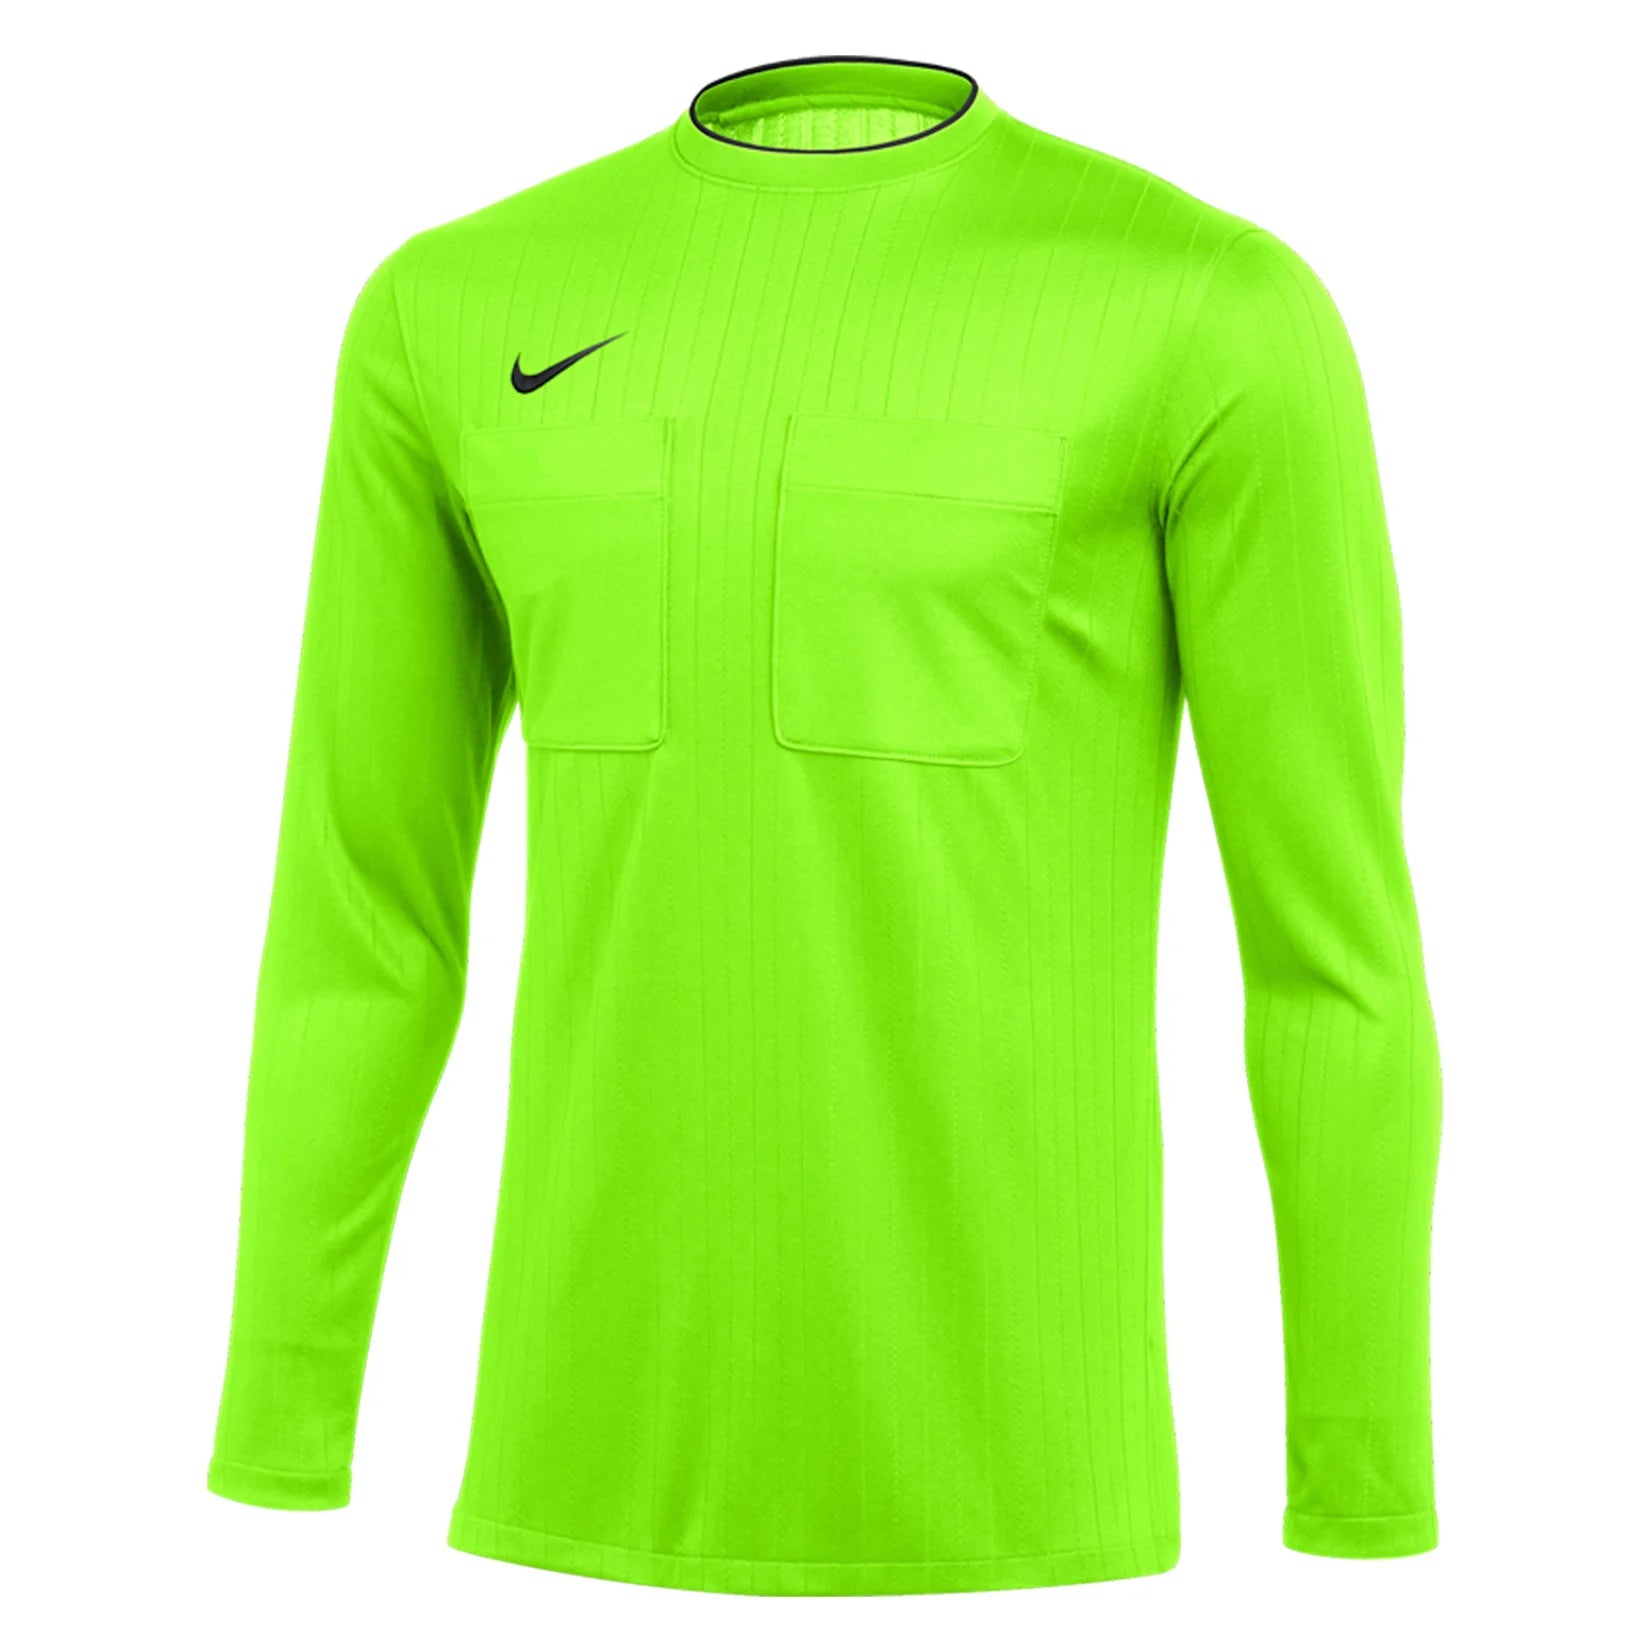 2022-26 Nike Referee Shirt L/S Volt - A&H International